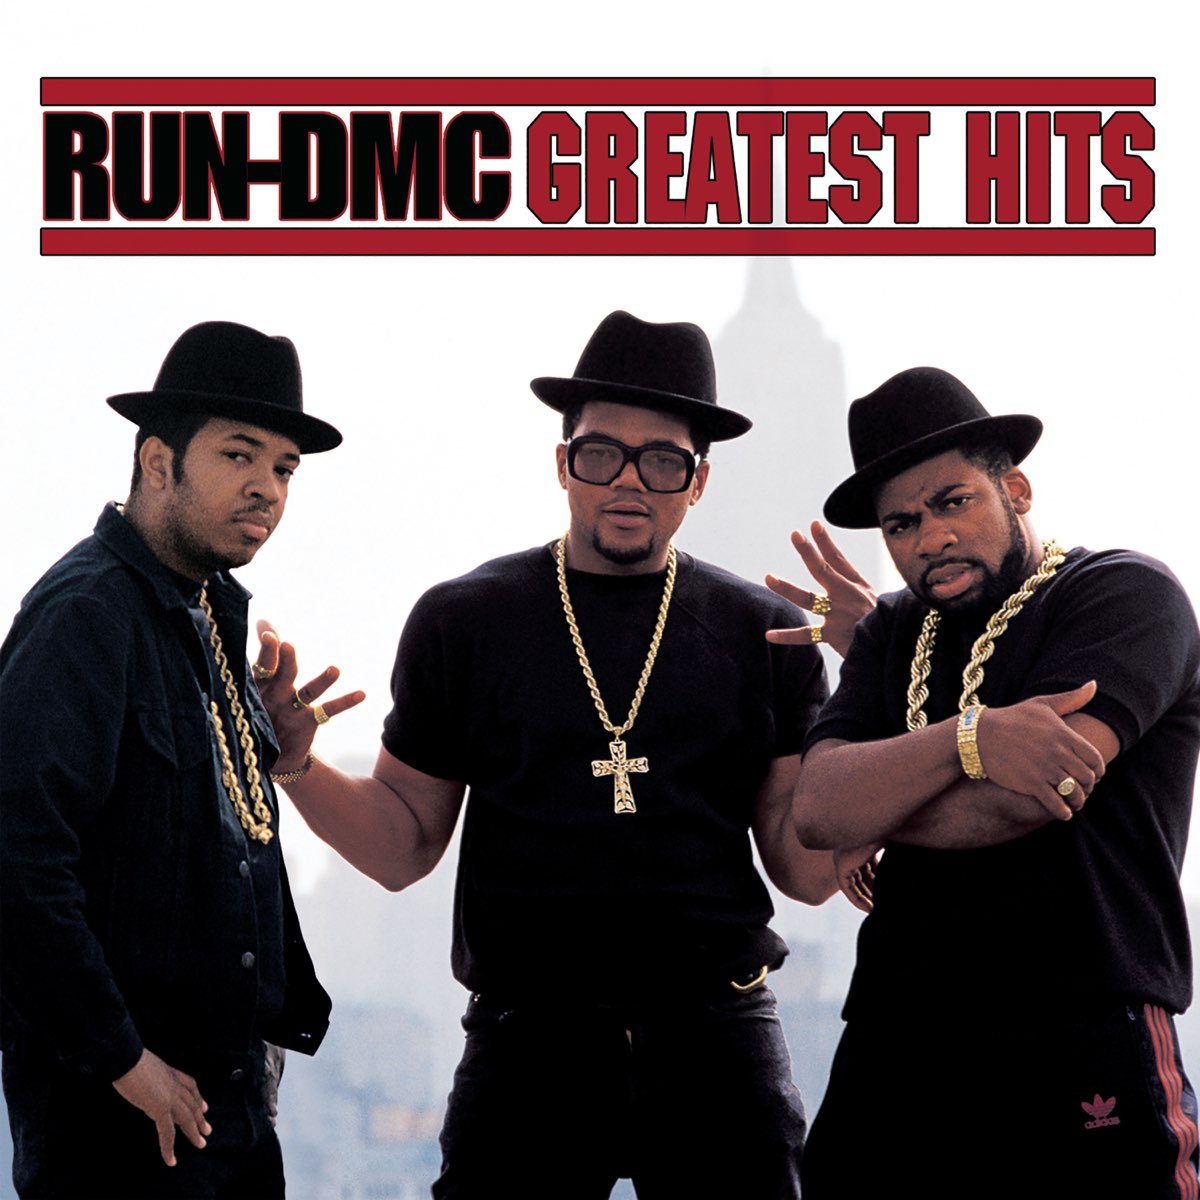 Greatest Hits – Album von Run-DMC – Apple Music